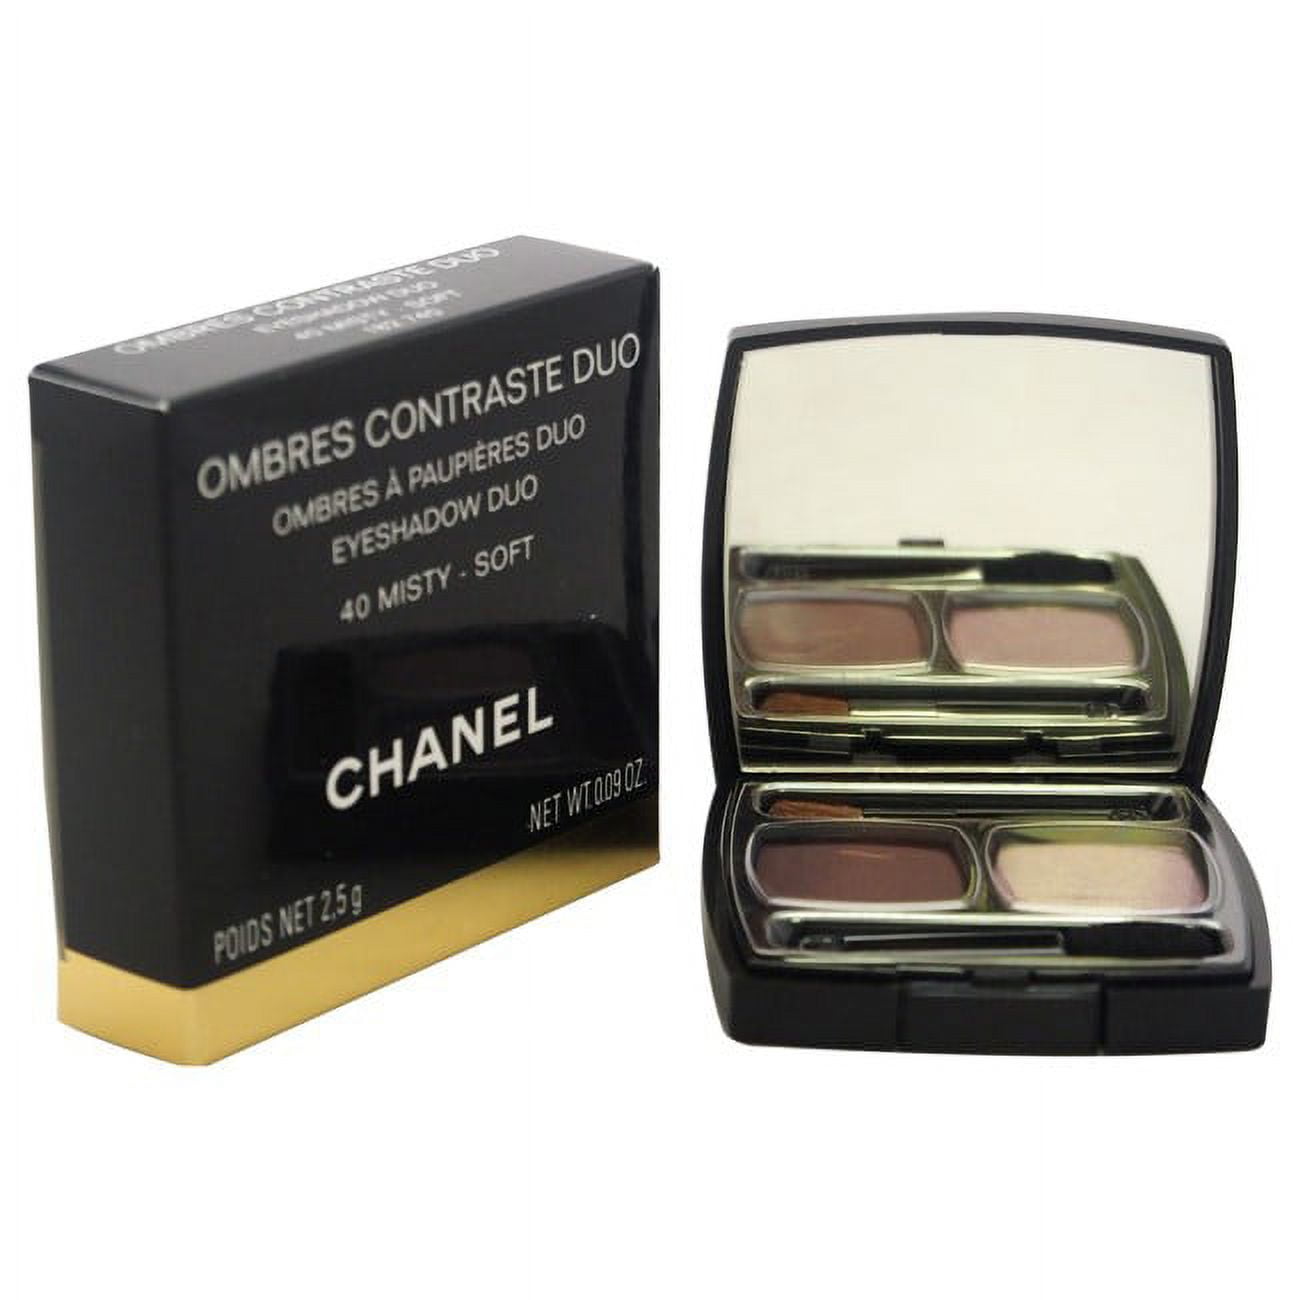 Chanel Ombres Contraste Duo / Eyeshadow Duo